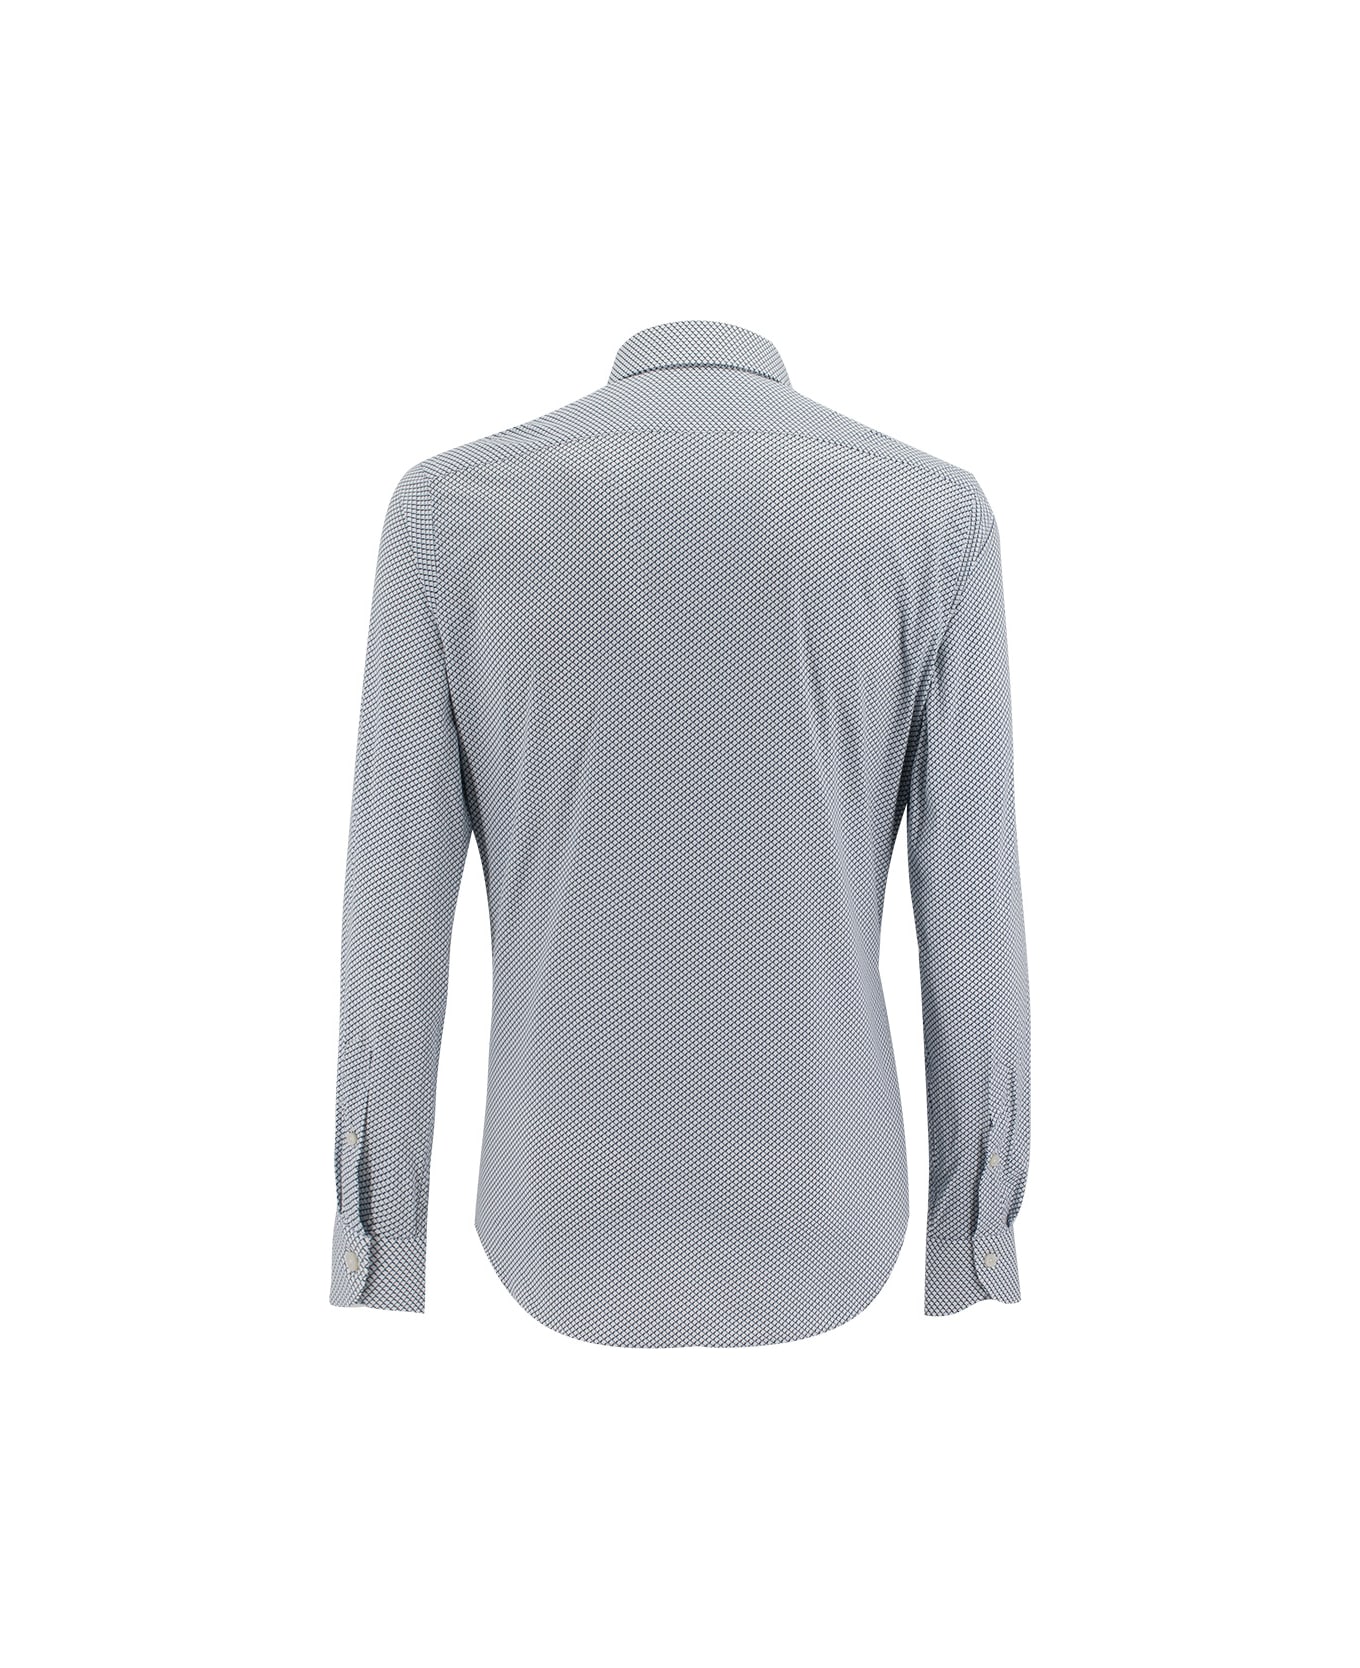 Xacus Shirt - WHITE AND BLUE FANTASY シャツ